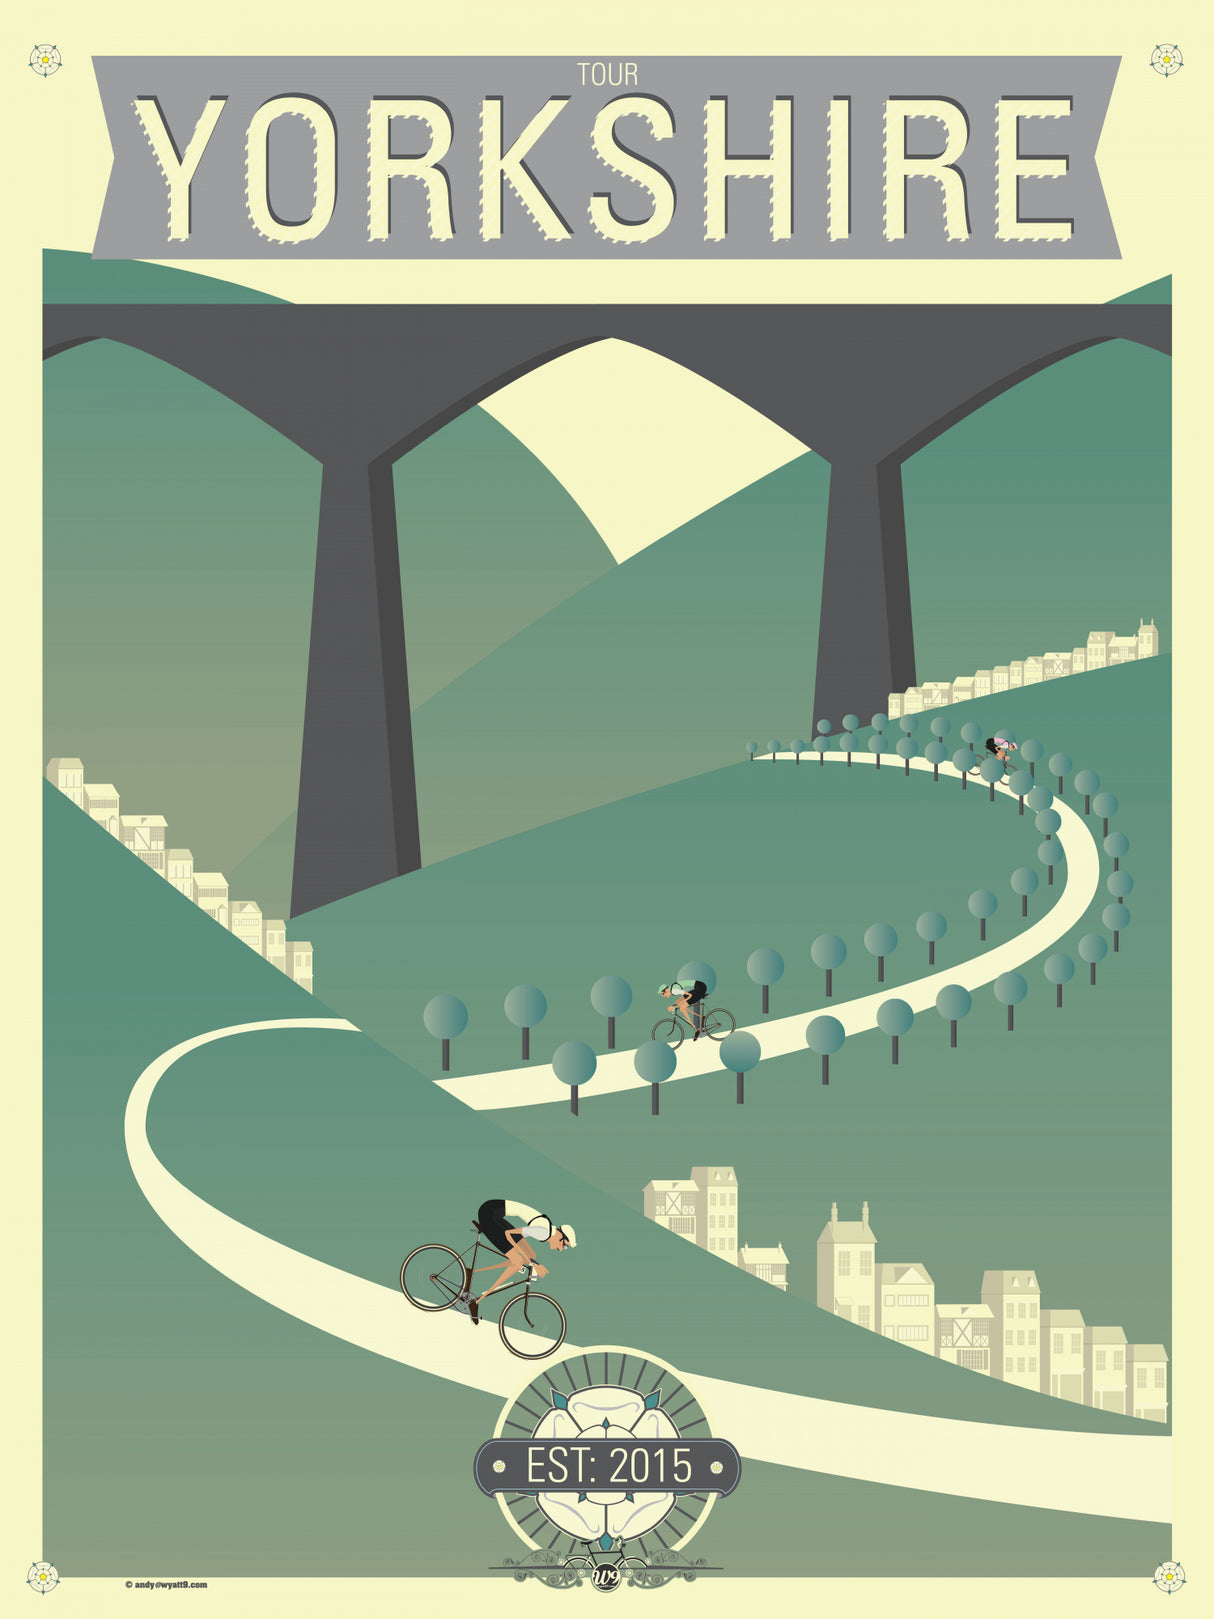 Tour De Yorkshire Bicycle Race Poster och Canvastavla